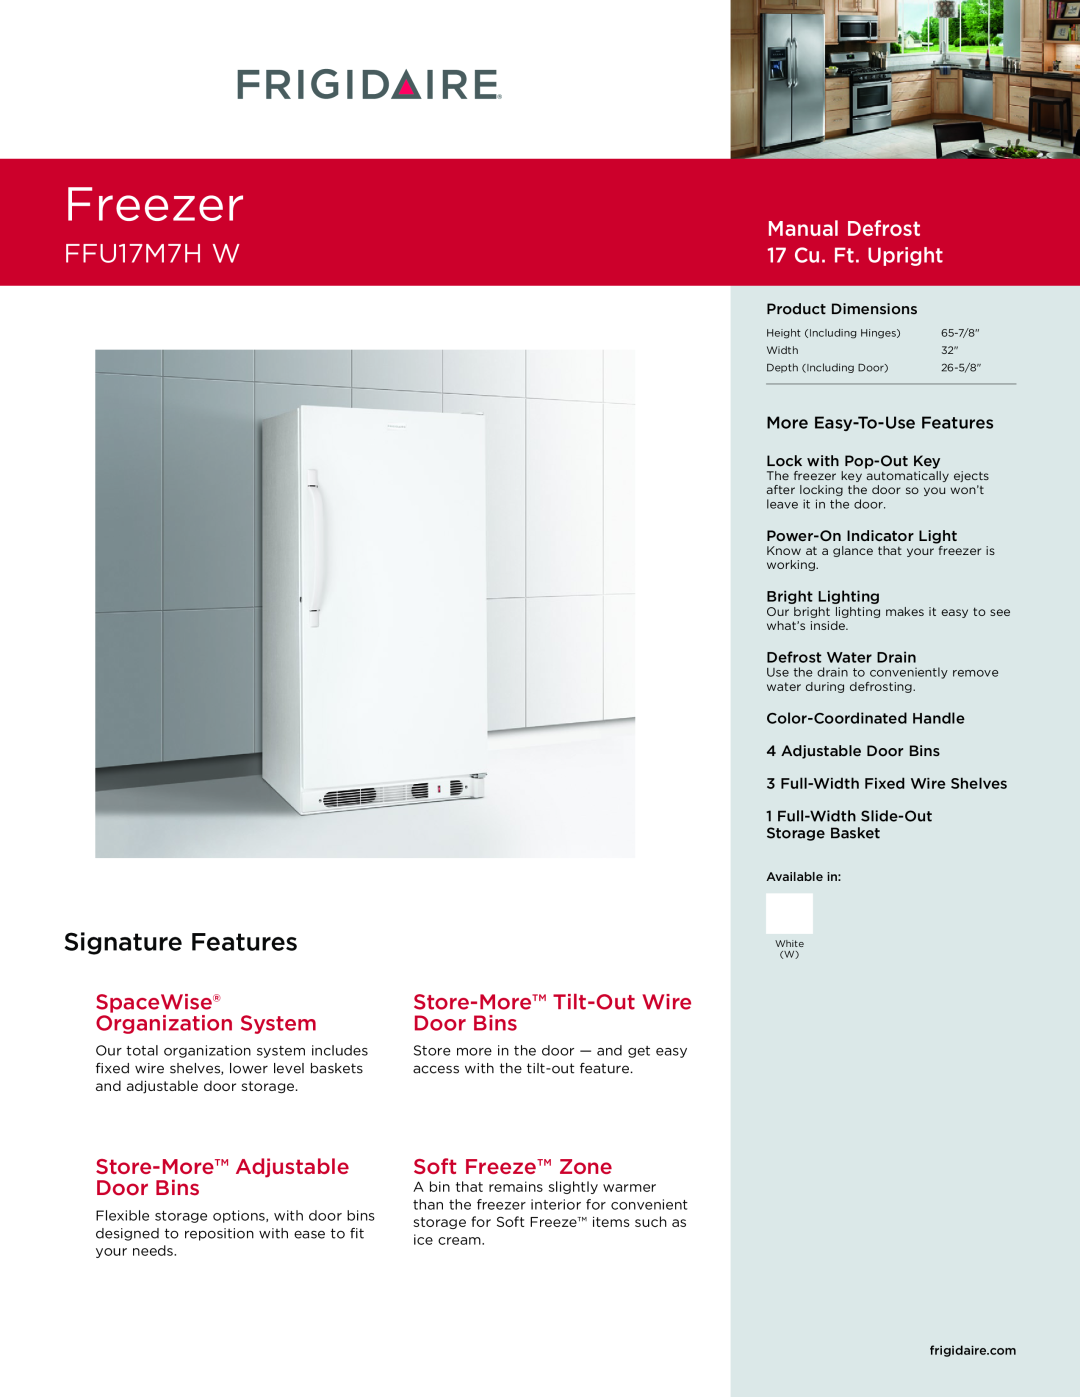 Frigidaire FFU17M7H W dimensions Freezer, Signature Features, Manual Defrost 17 Cu. Ft. Upright, Soft Freeze Zone 